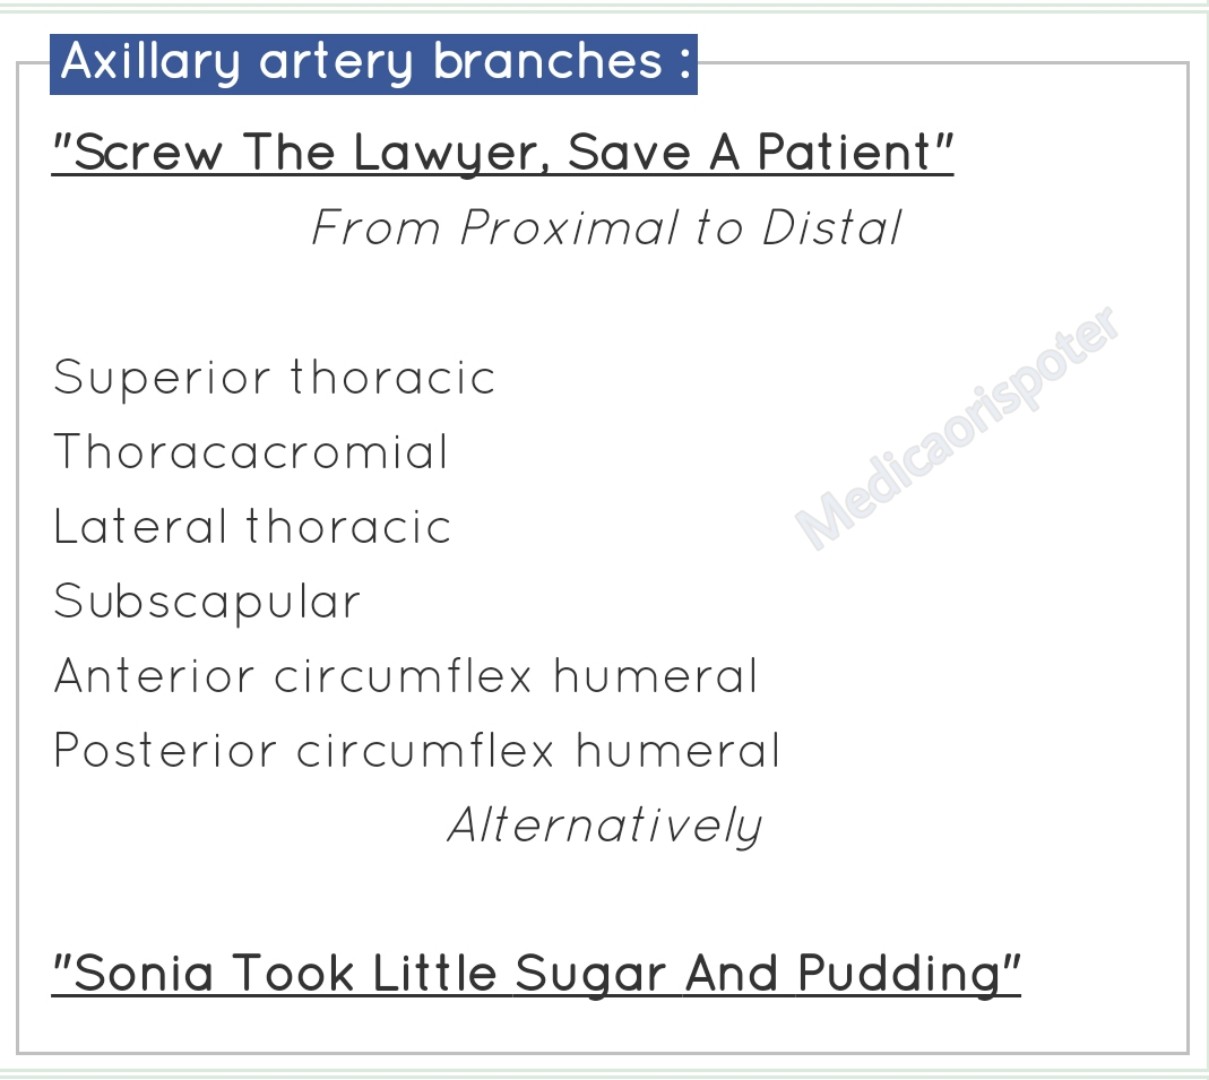 Branches of Axillary Artery